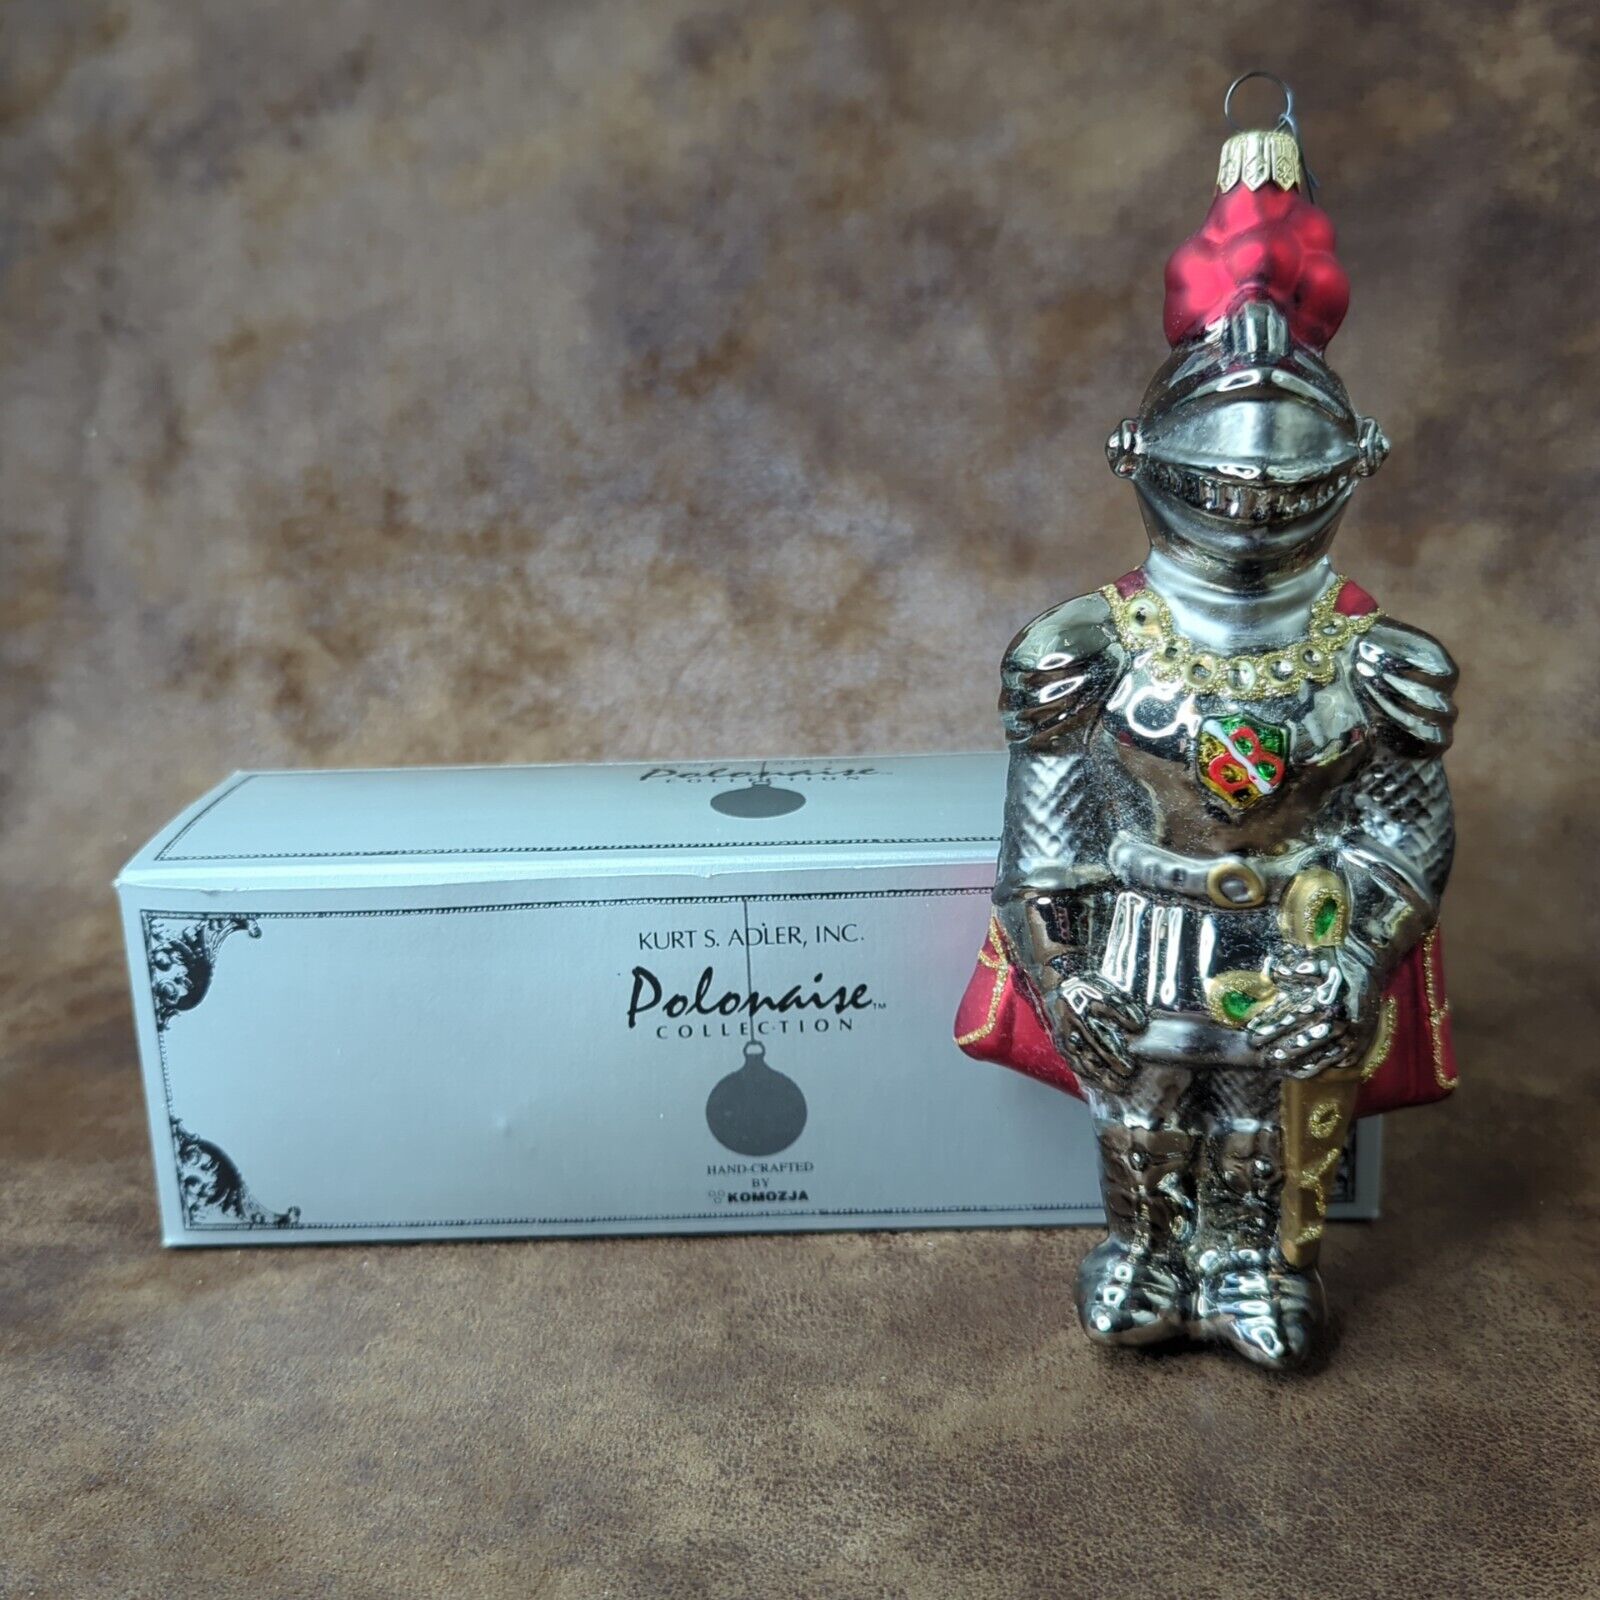 Kurt S. Adler Polonaise KNIGHT IN ARMOR Ornament Original Box Handmade in Poland